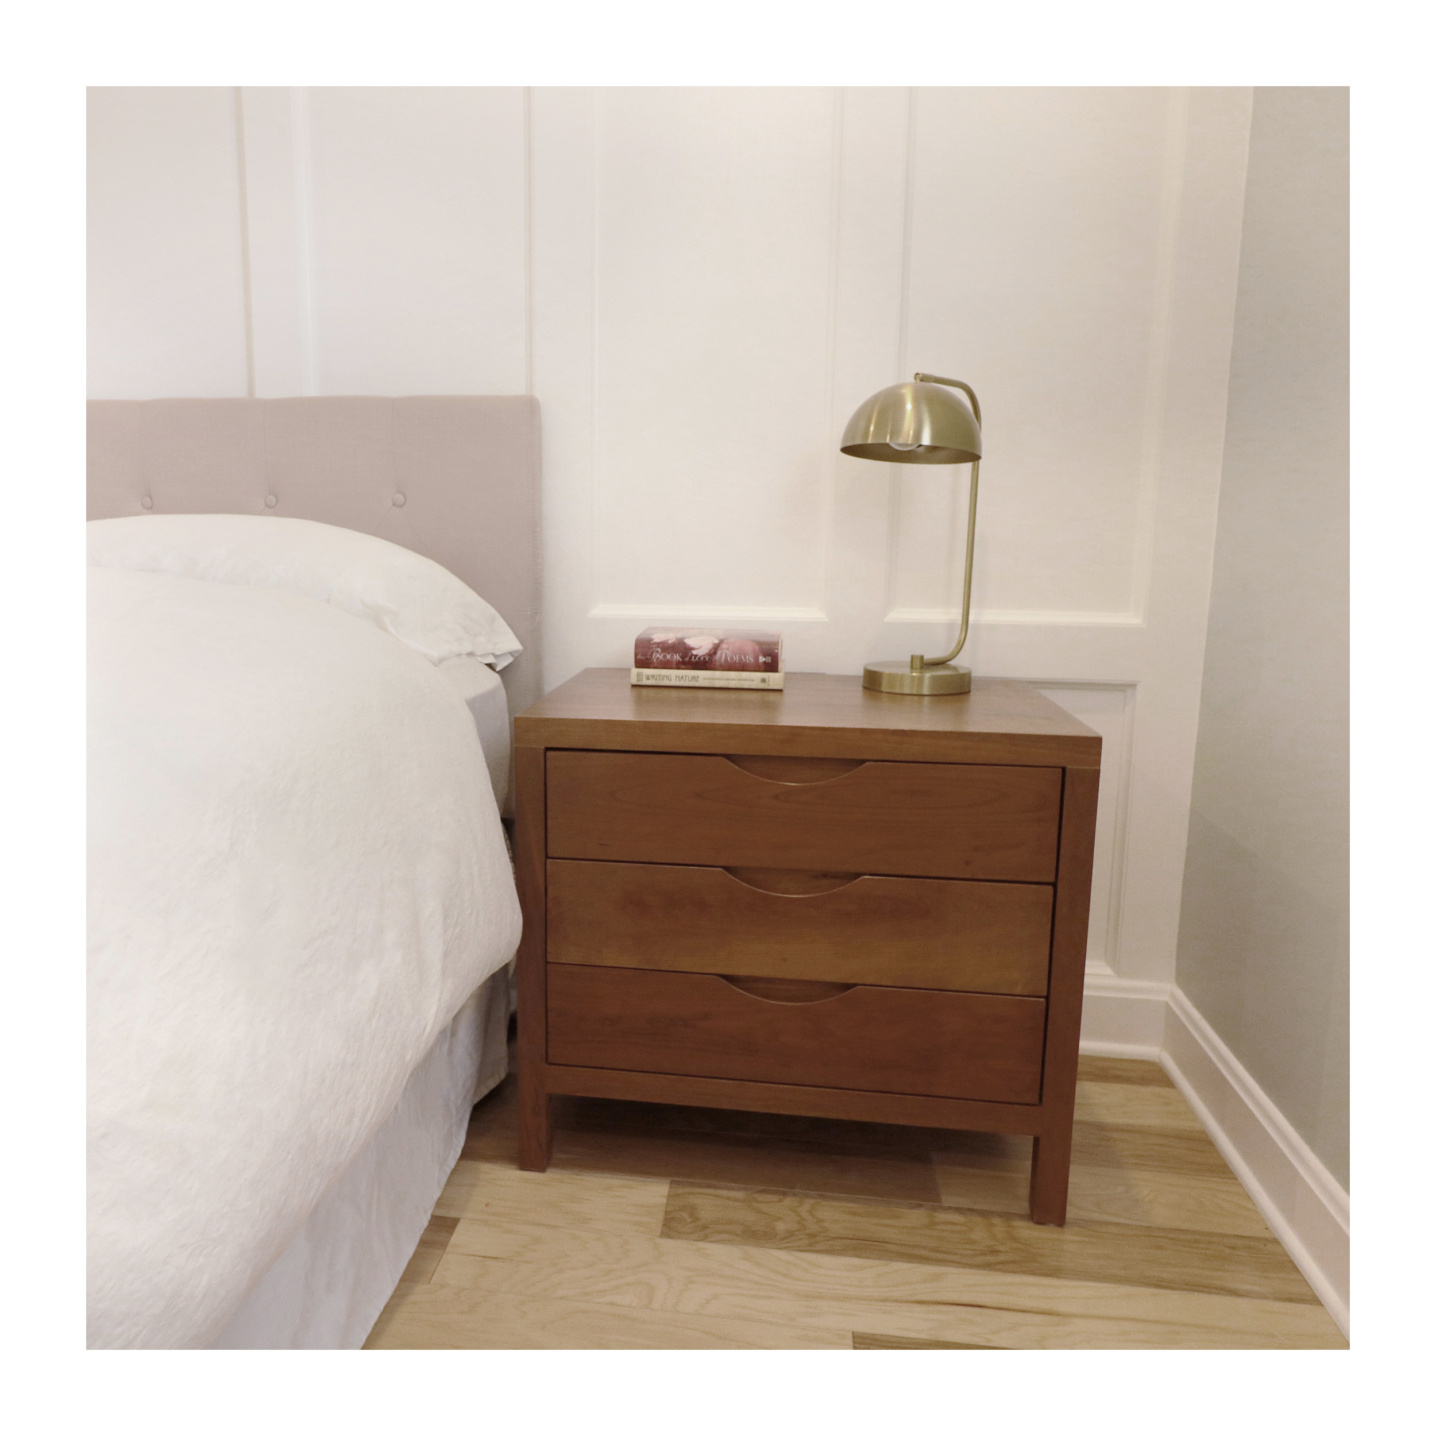 Cherry modern nightstand with three drawers